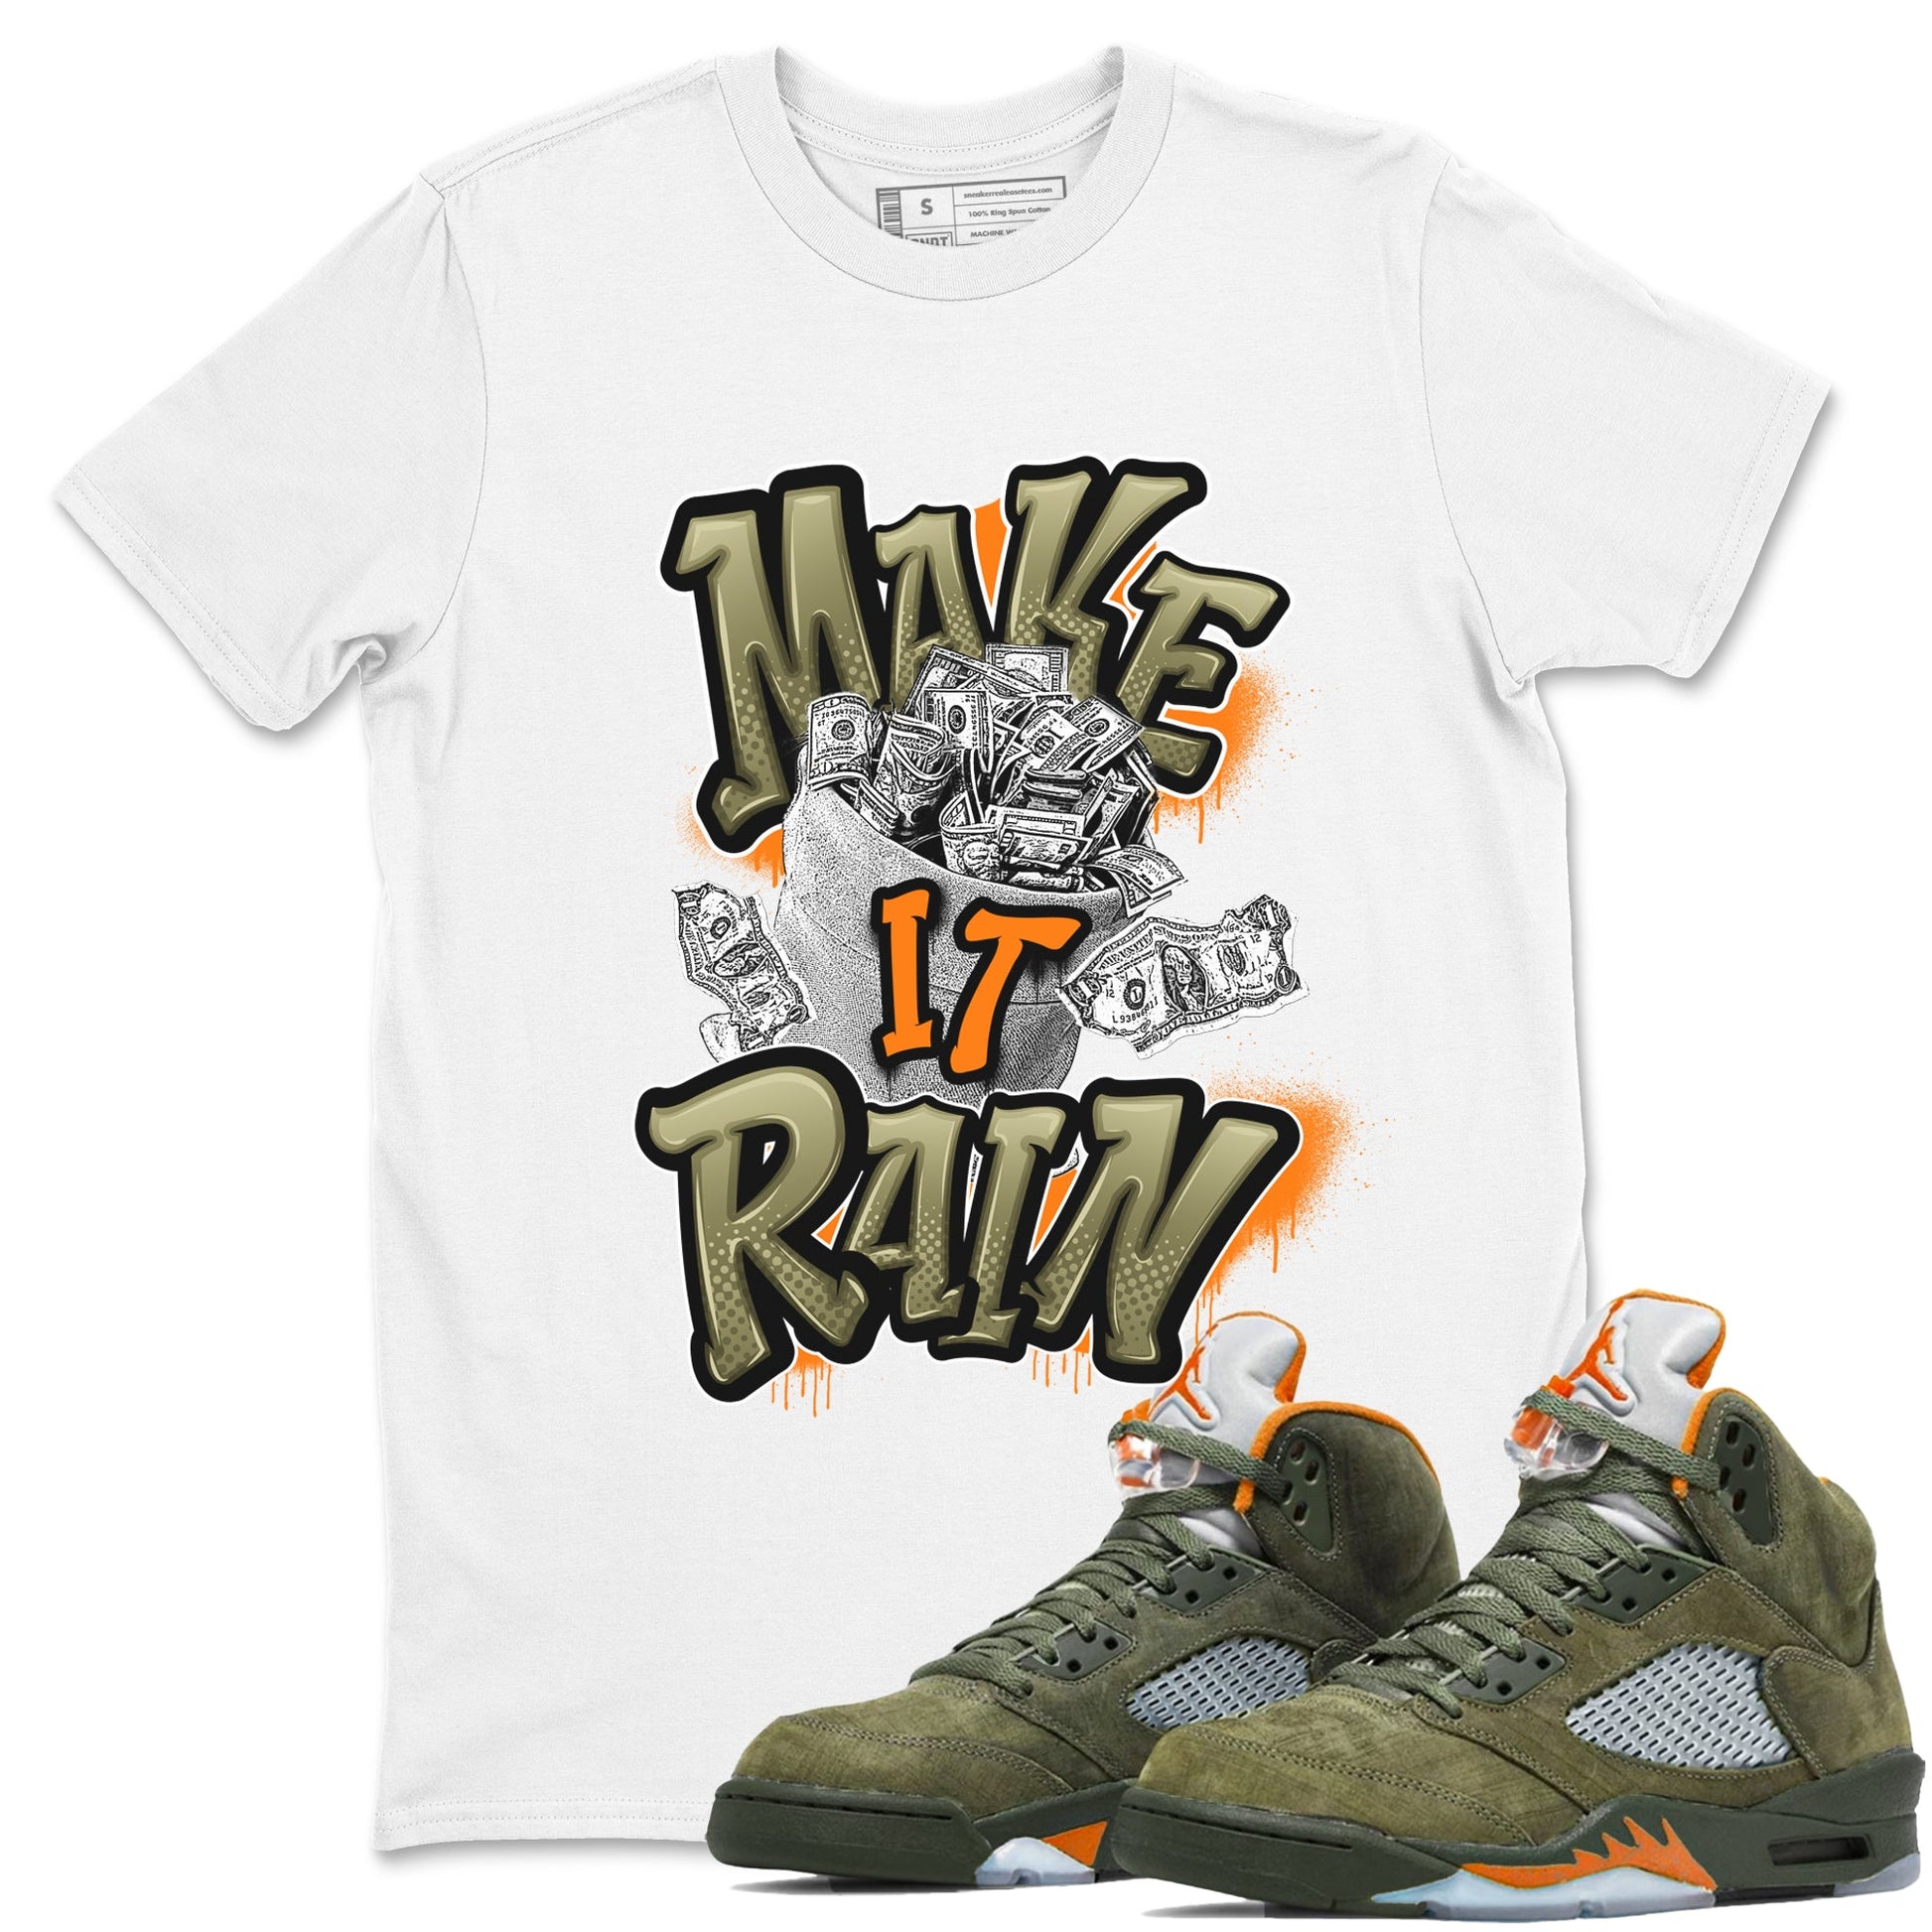 5s Olive shirt to match jordans Make It Rain sneaker tees Air Jordan 5 Olive SNRT Sneaker Release Tees unisex cotton White 1 crew neck shirt